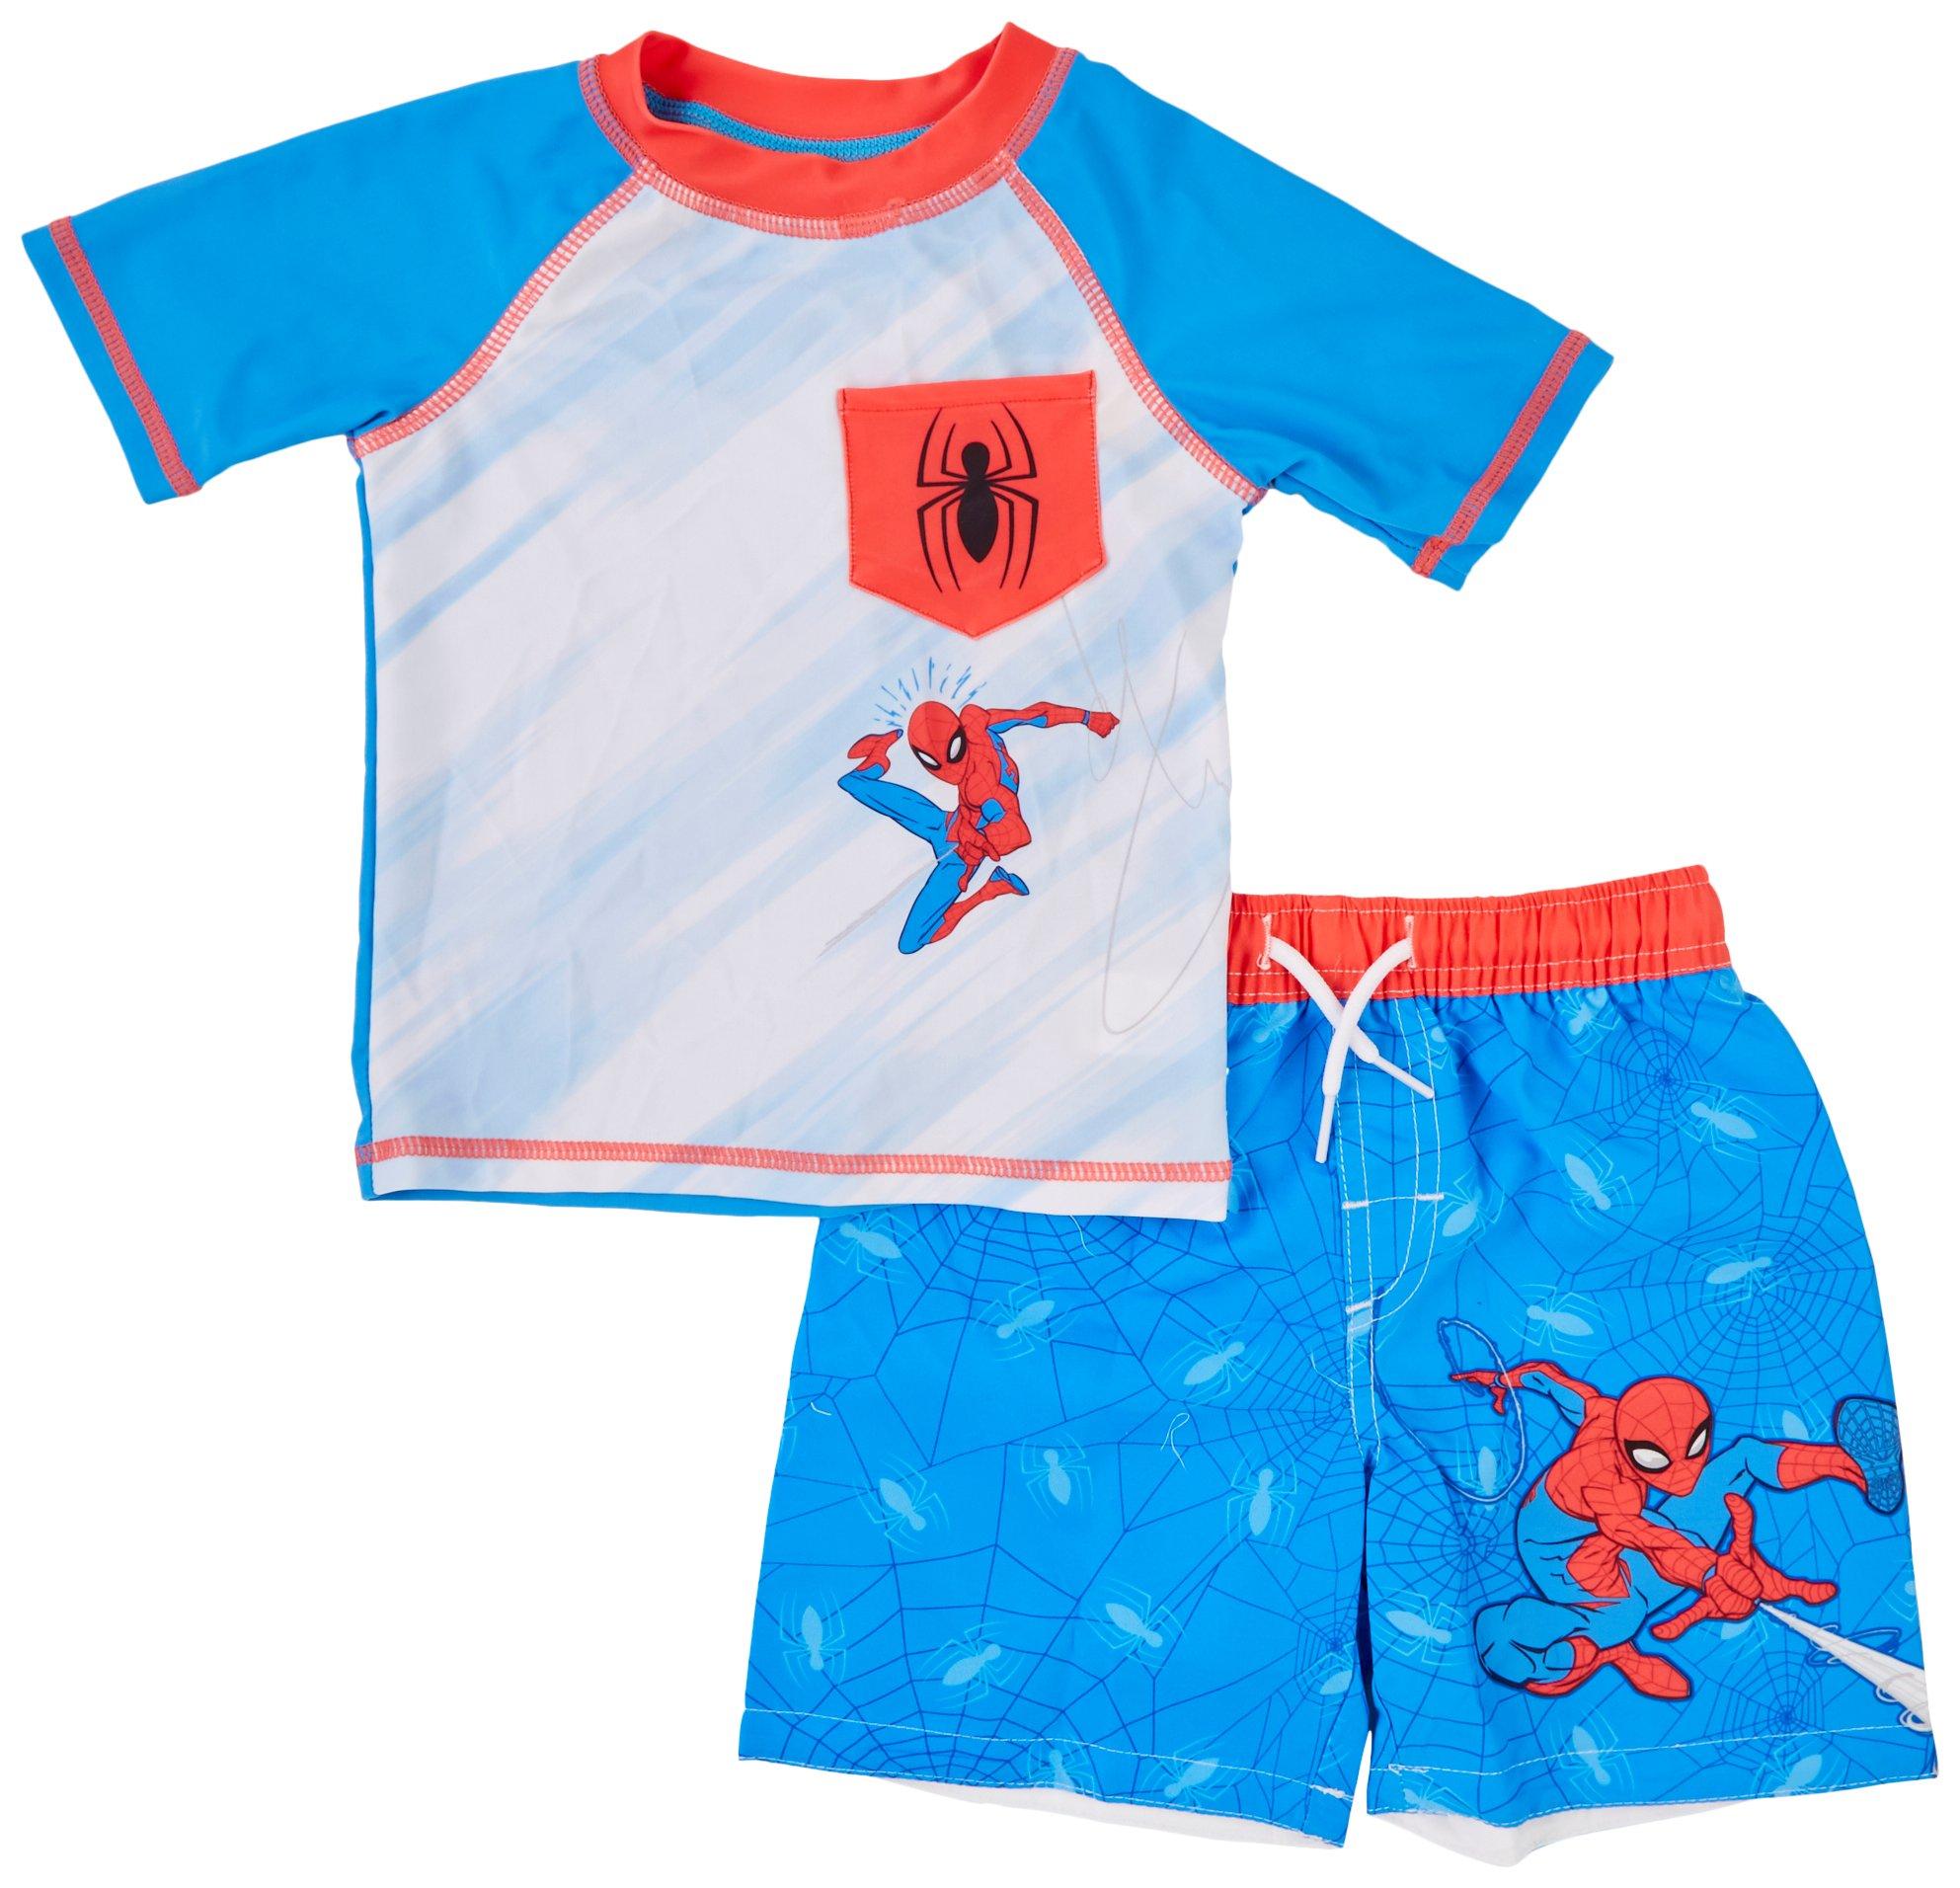 Spiderman Toddler Boys 2-pc. Tops & Swim Shorts Set